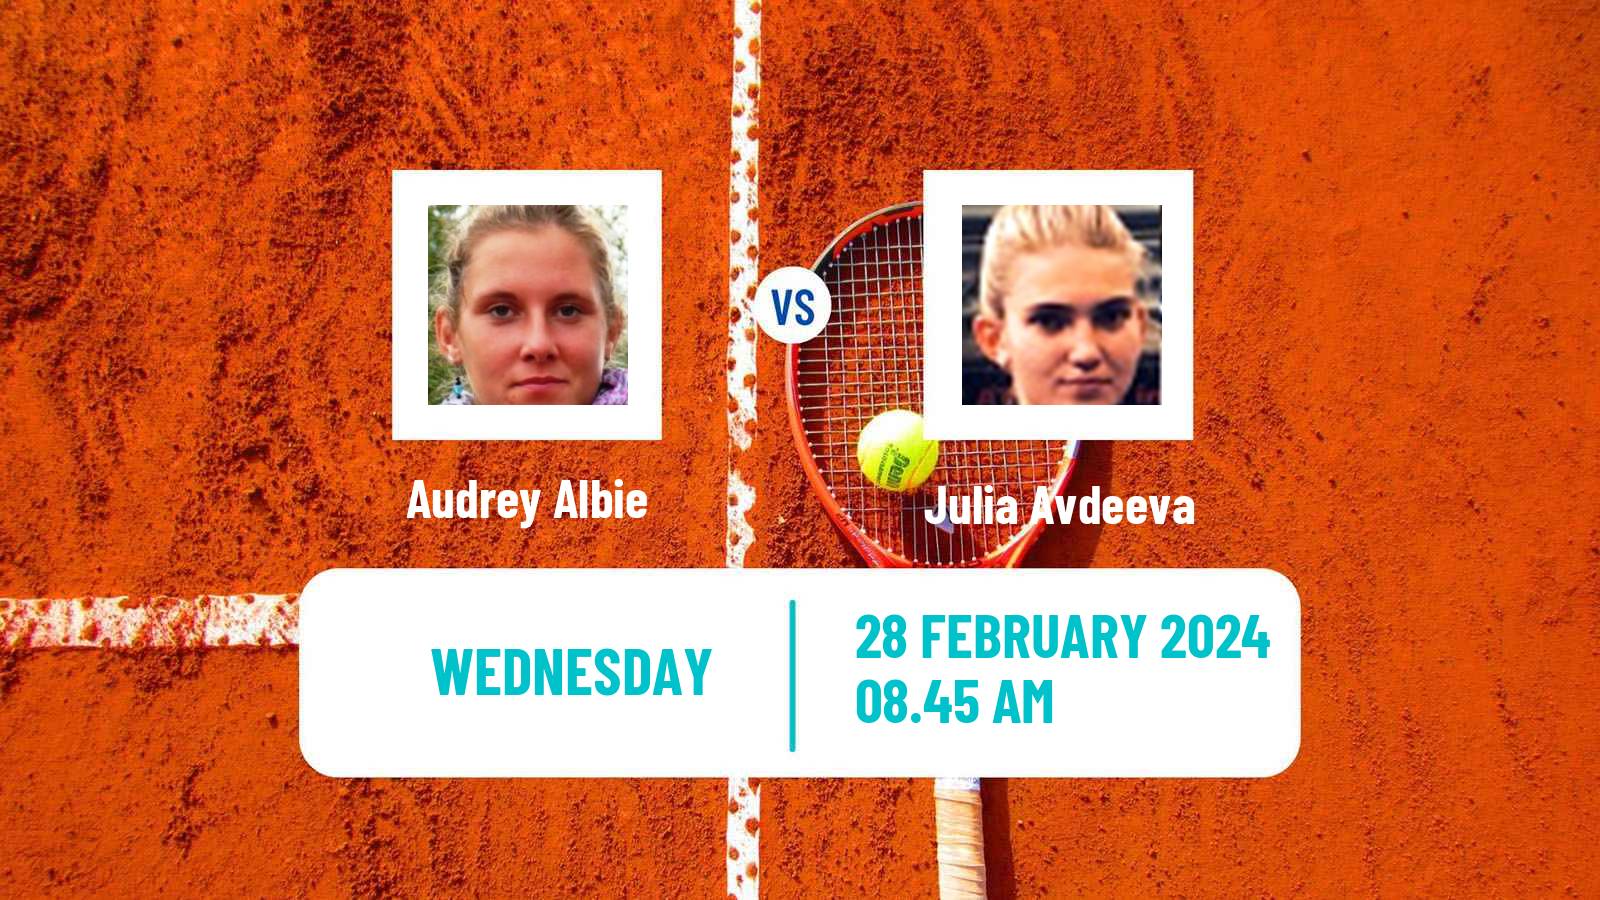 Tennis ITF W50 Macon Women Audrey Albie - Julia Avdeeva